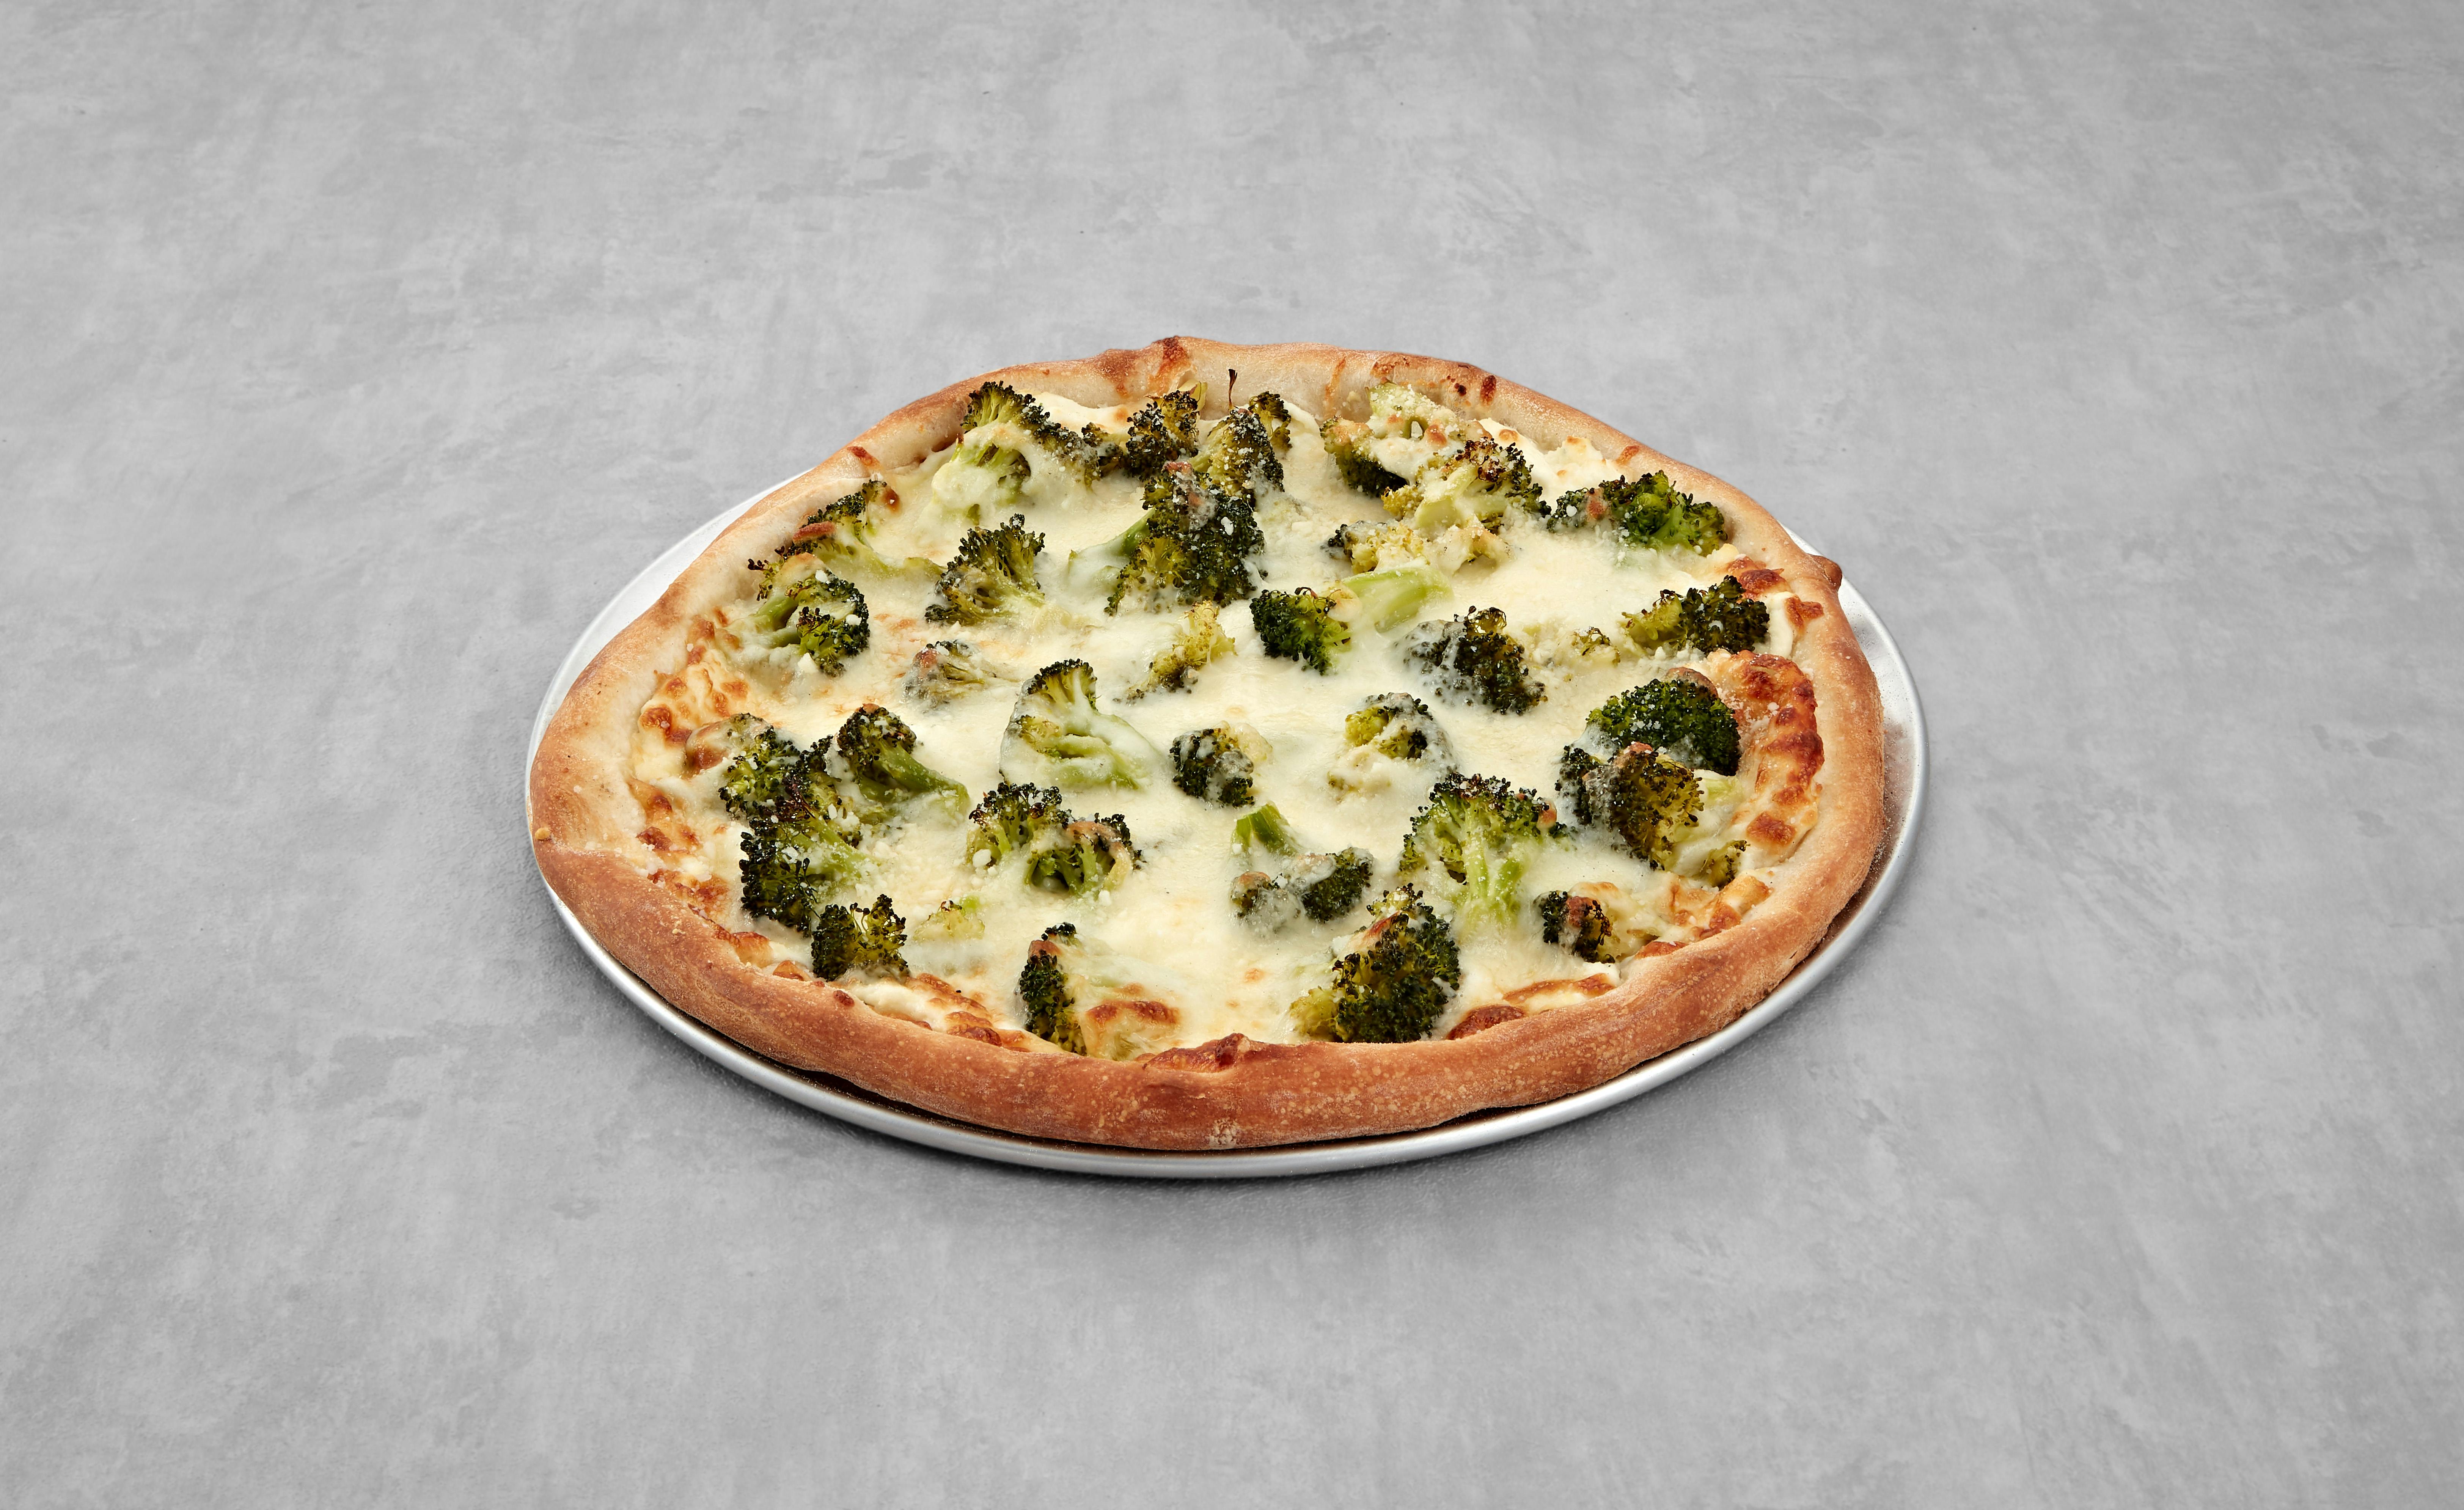 White Broccoli Pizza Personal from Mario's Pizzeria in Seaford, NY